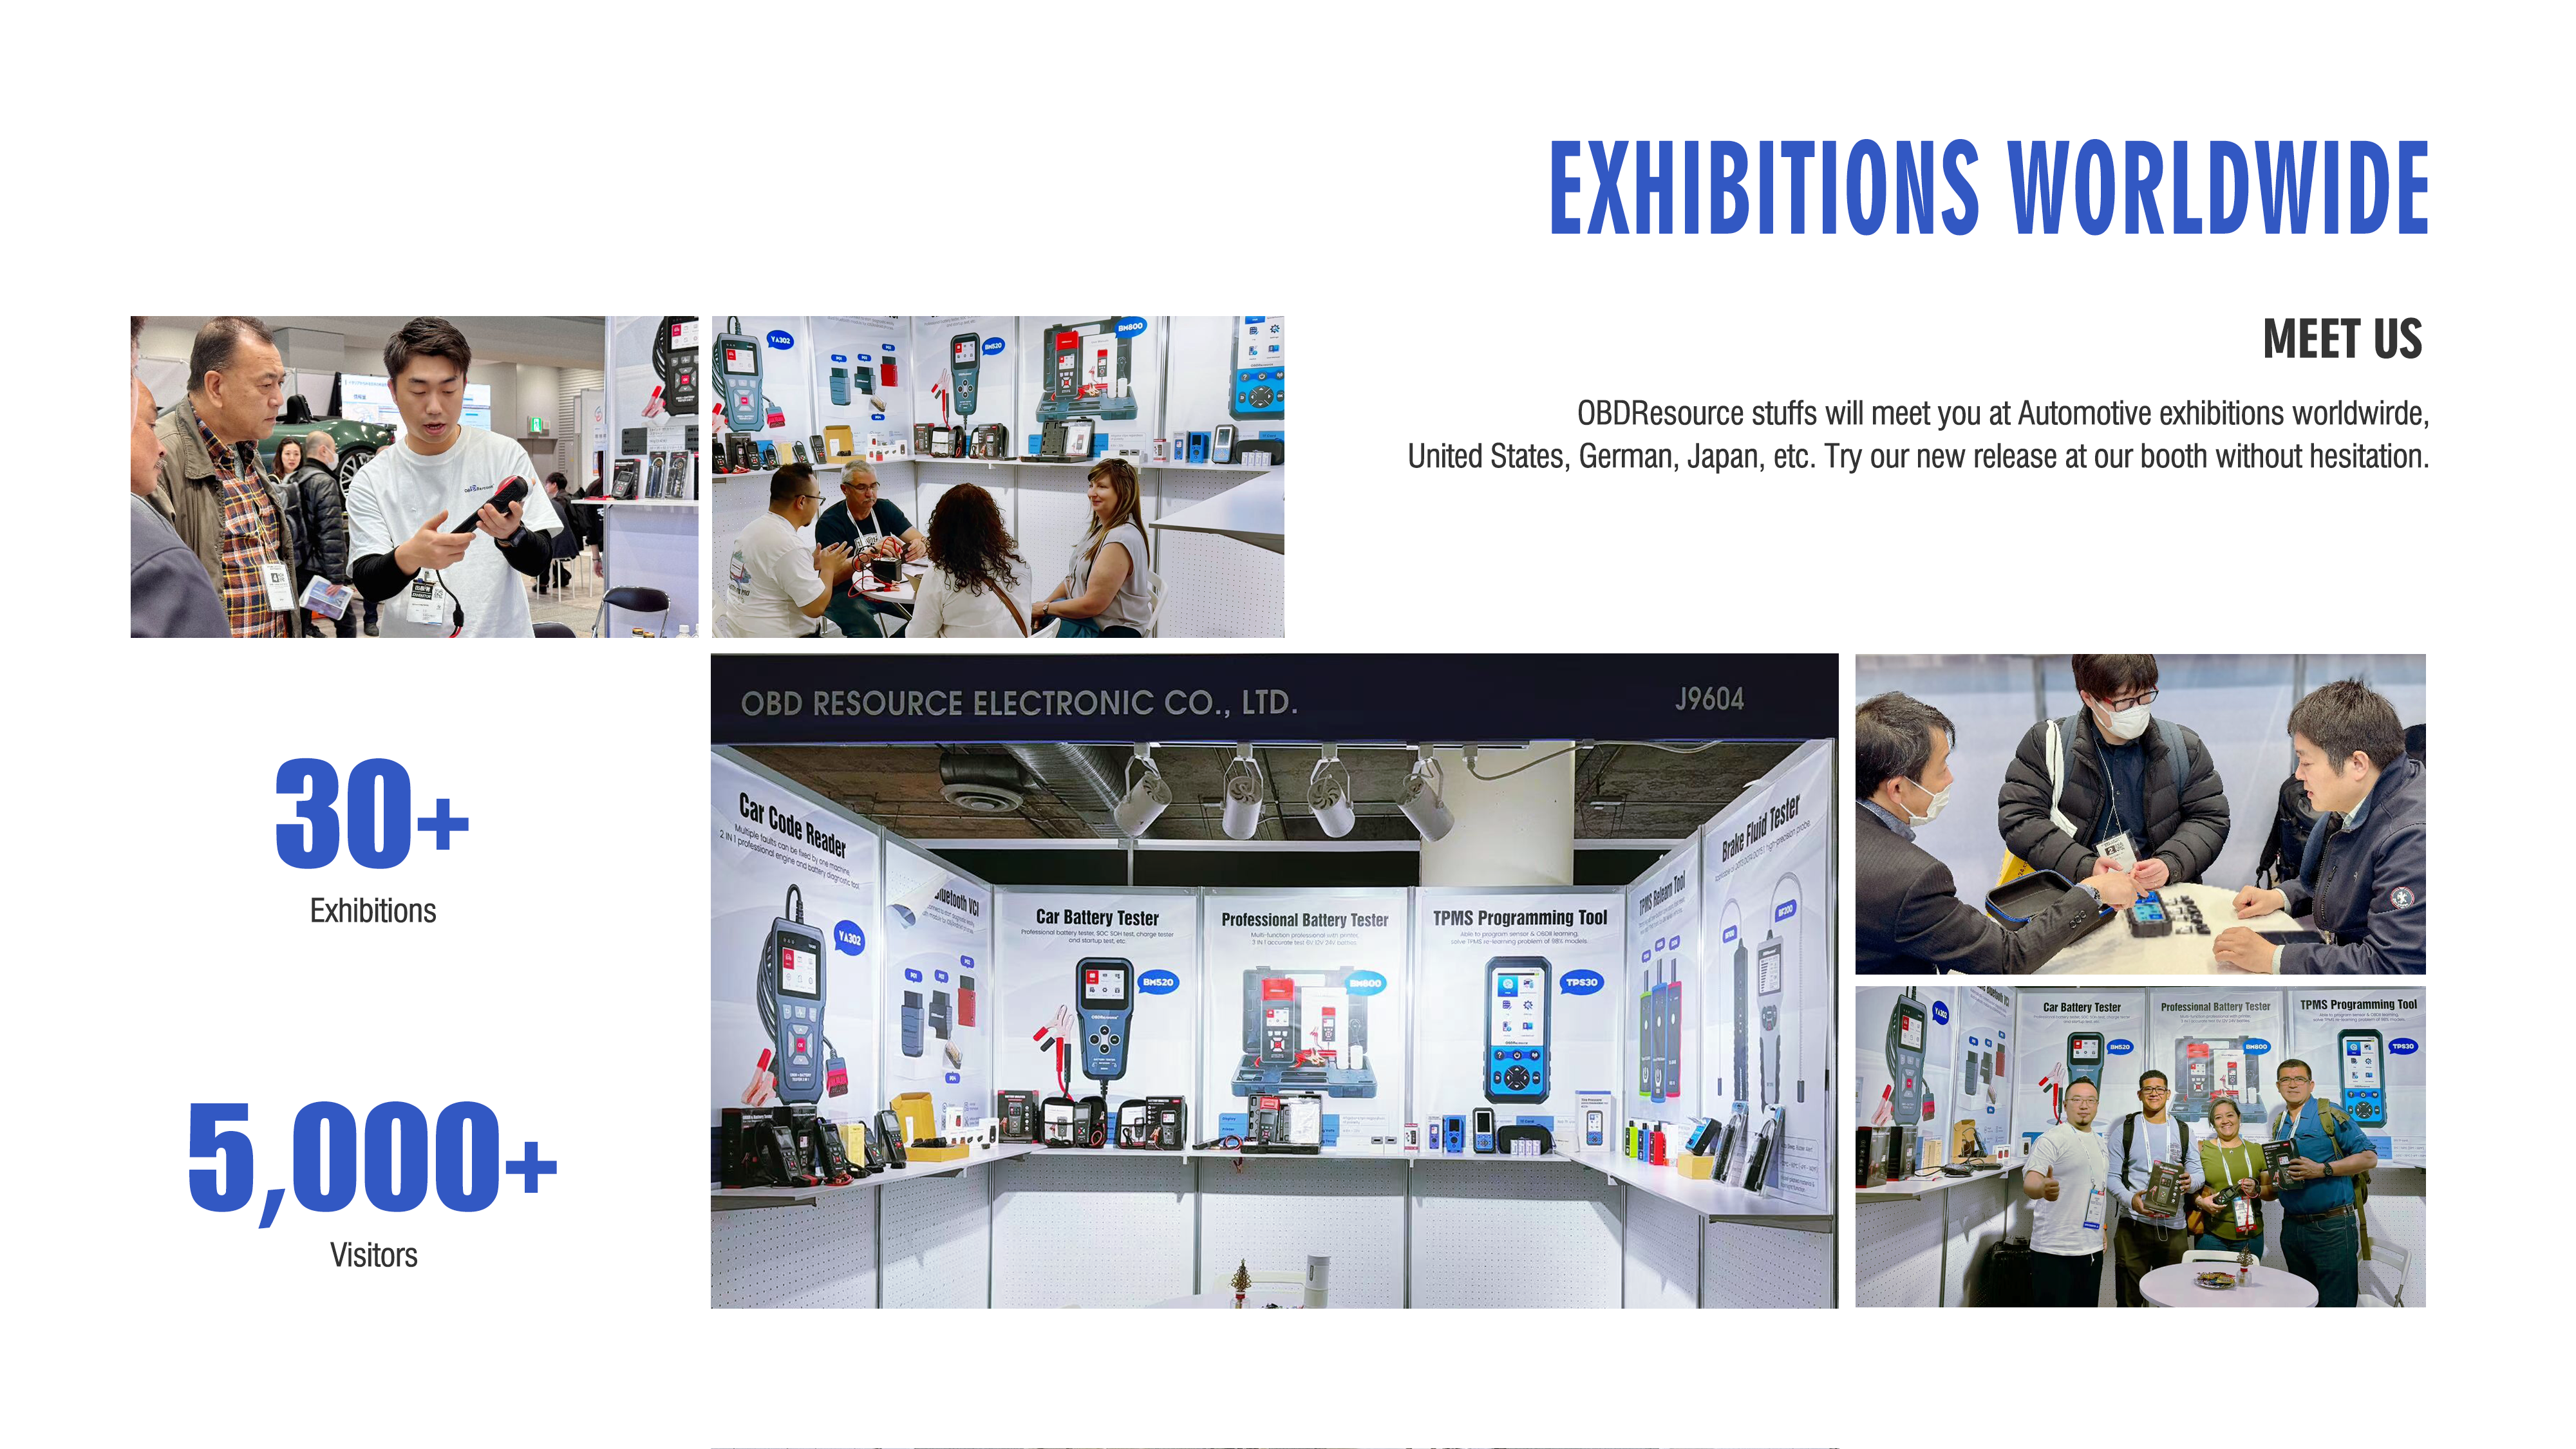 OBDResource Exhibitions